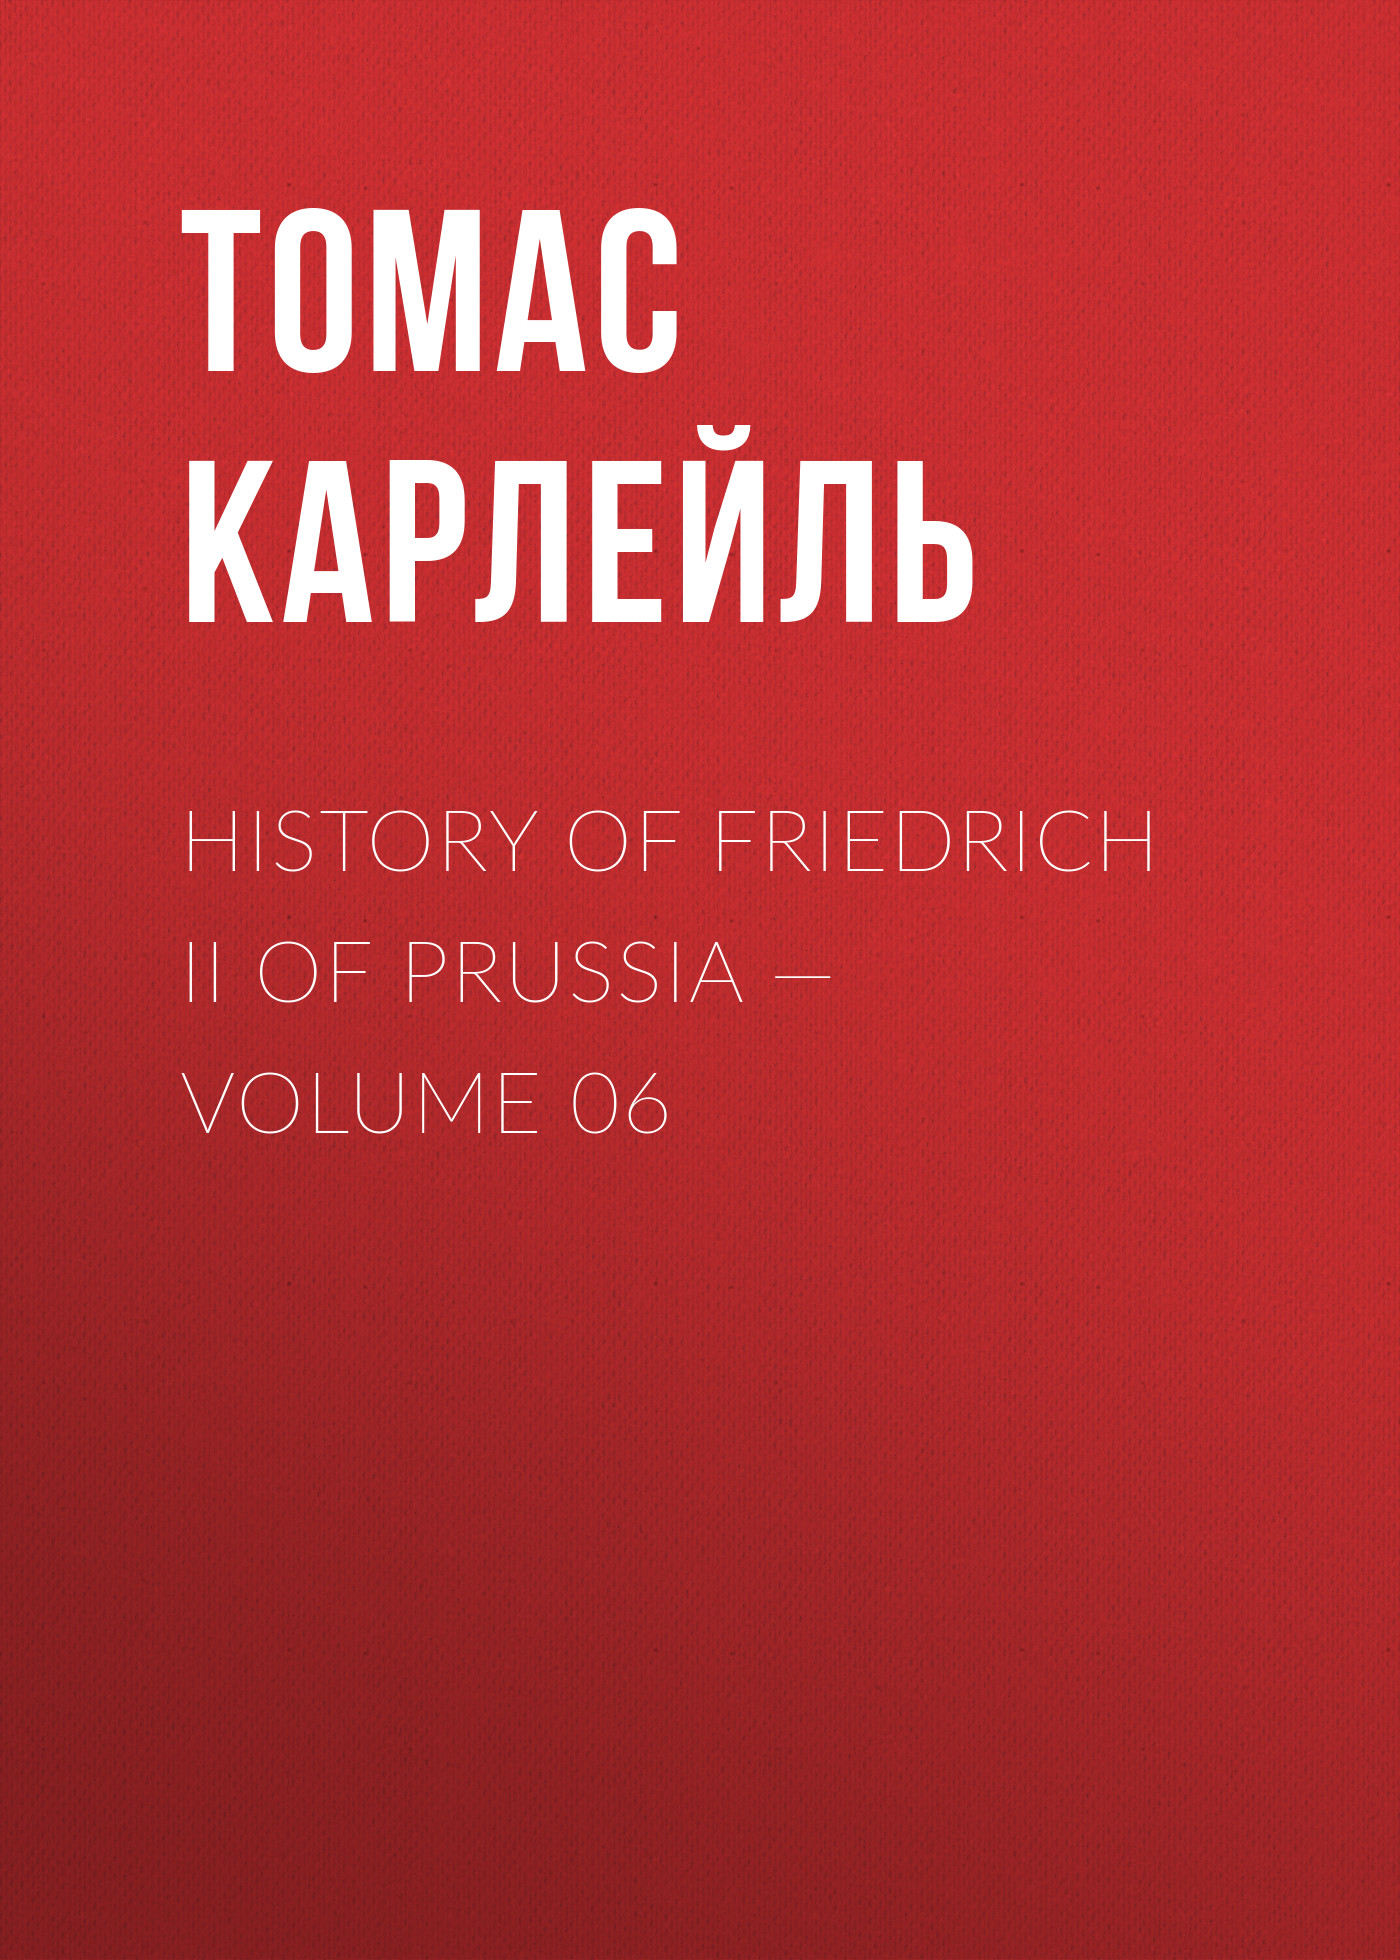 History of Friedrich II of Prussia— Volume 06